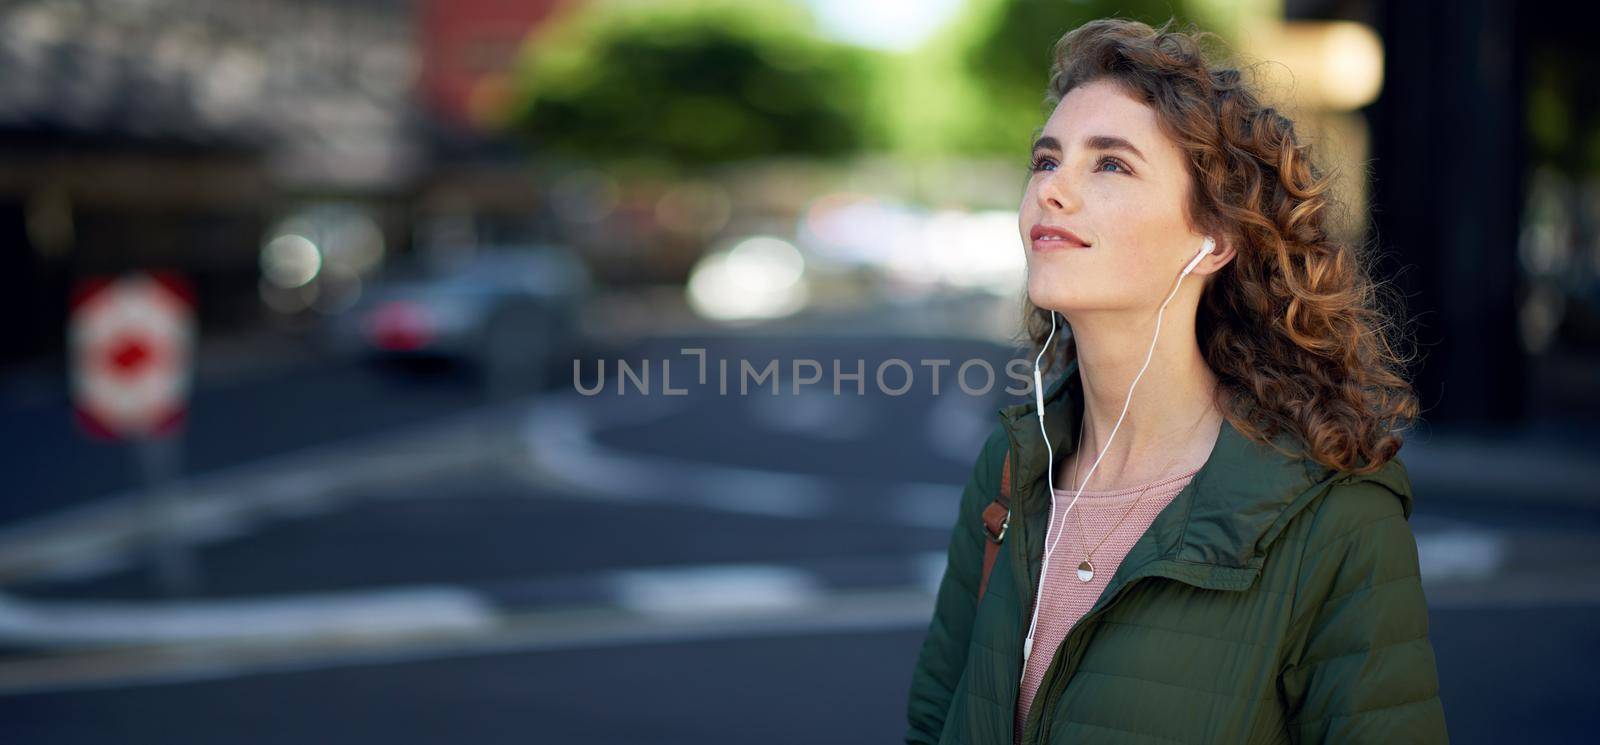 beautiful woman walking in city street listening to music wearing earphones urban lifestyle by YuriArcurs